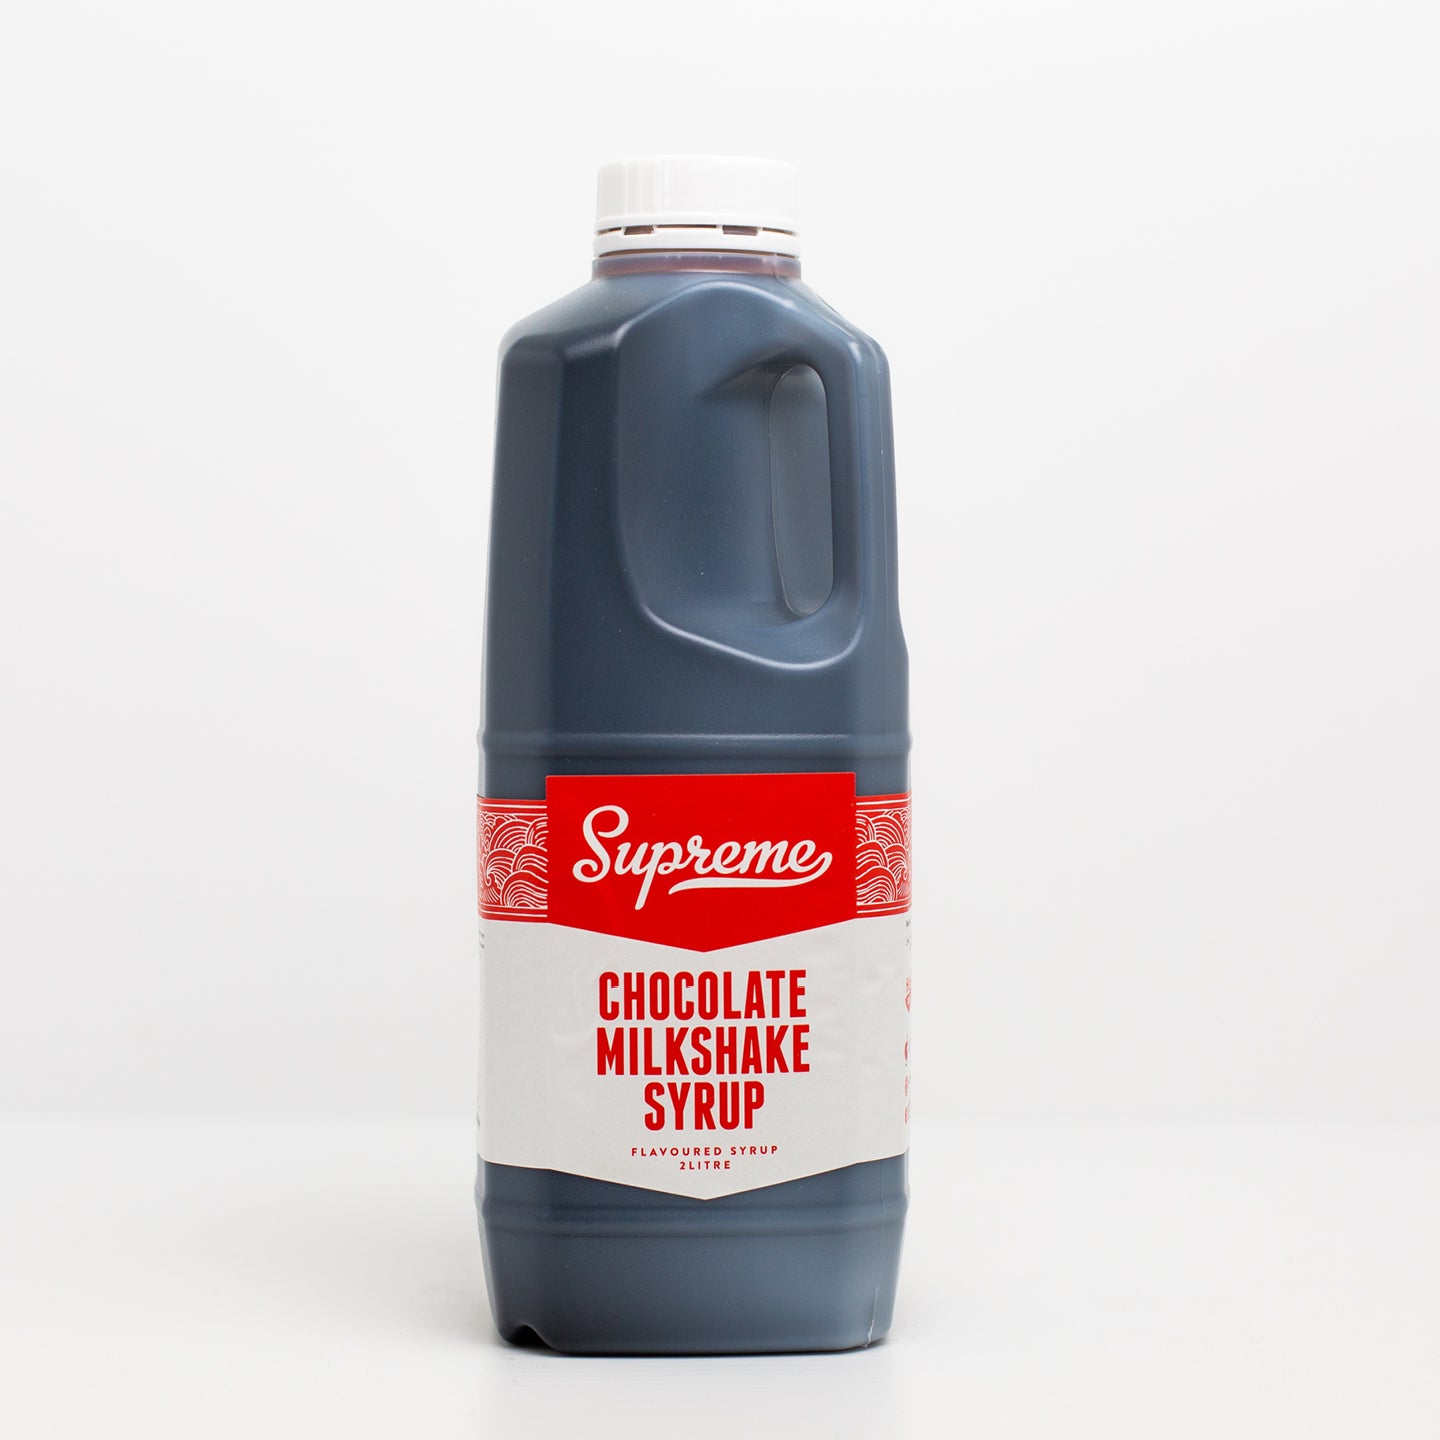 Supreme Milkshake Syrup 2L CHOCOLATE